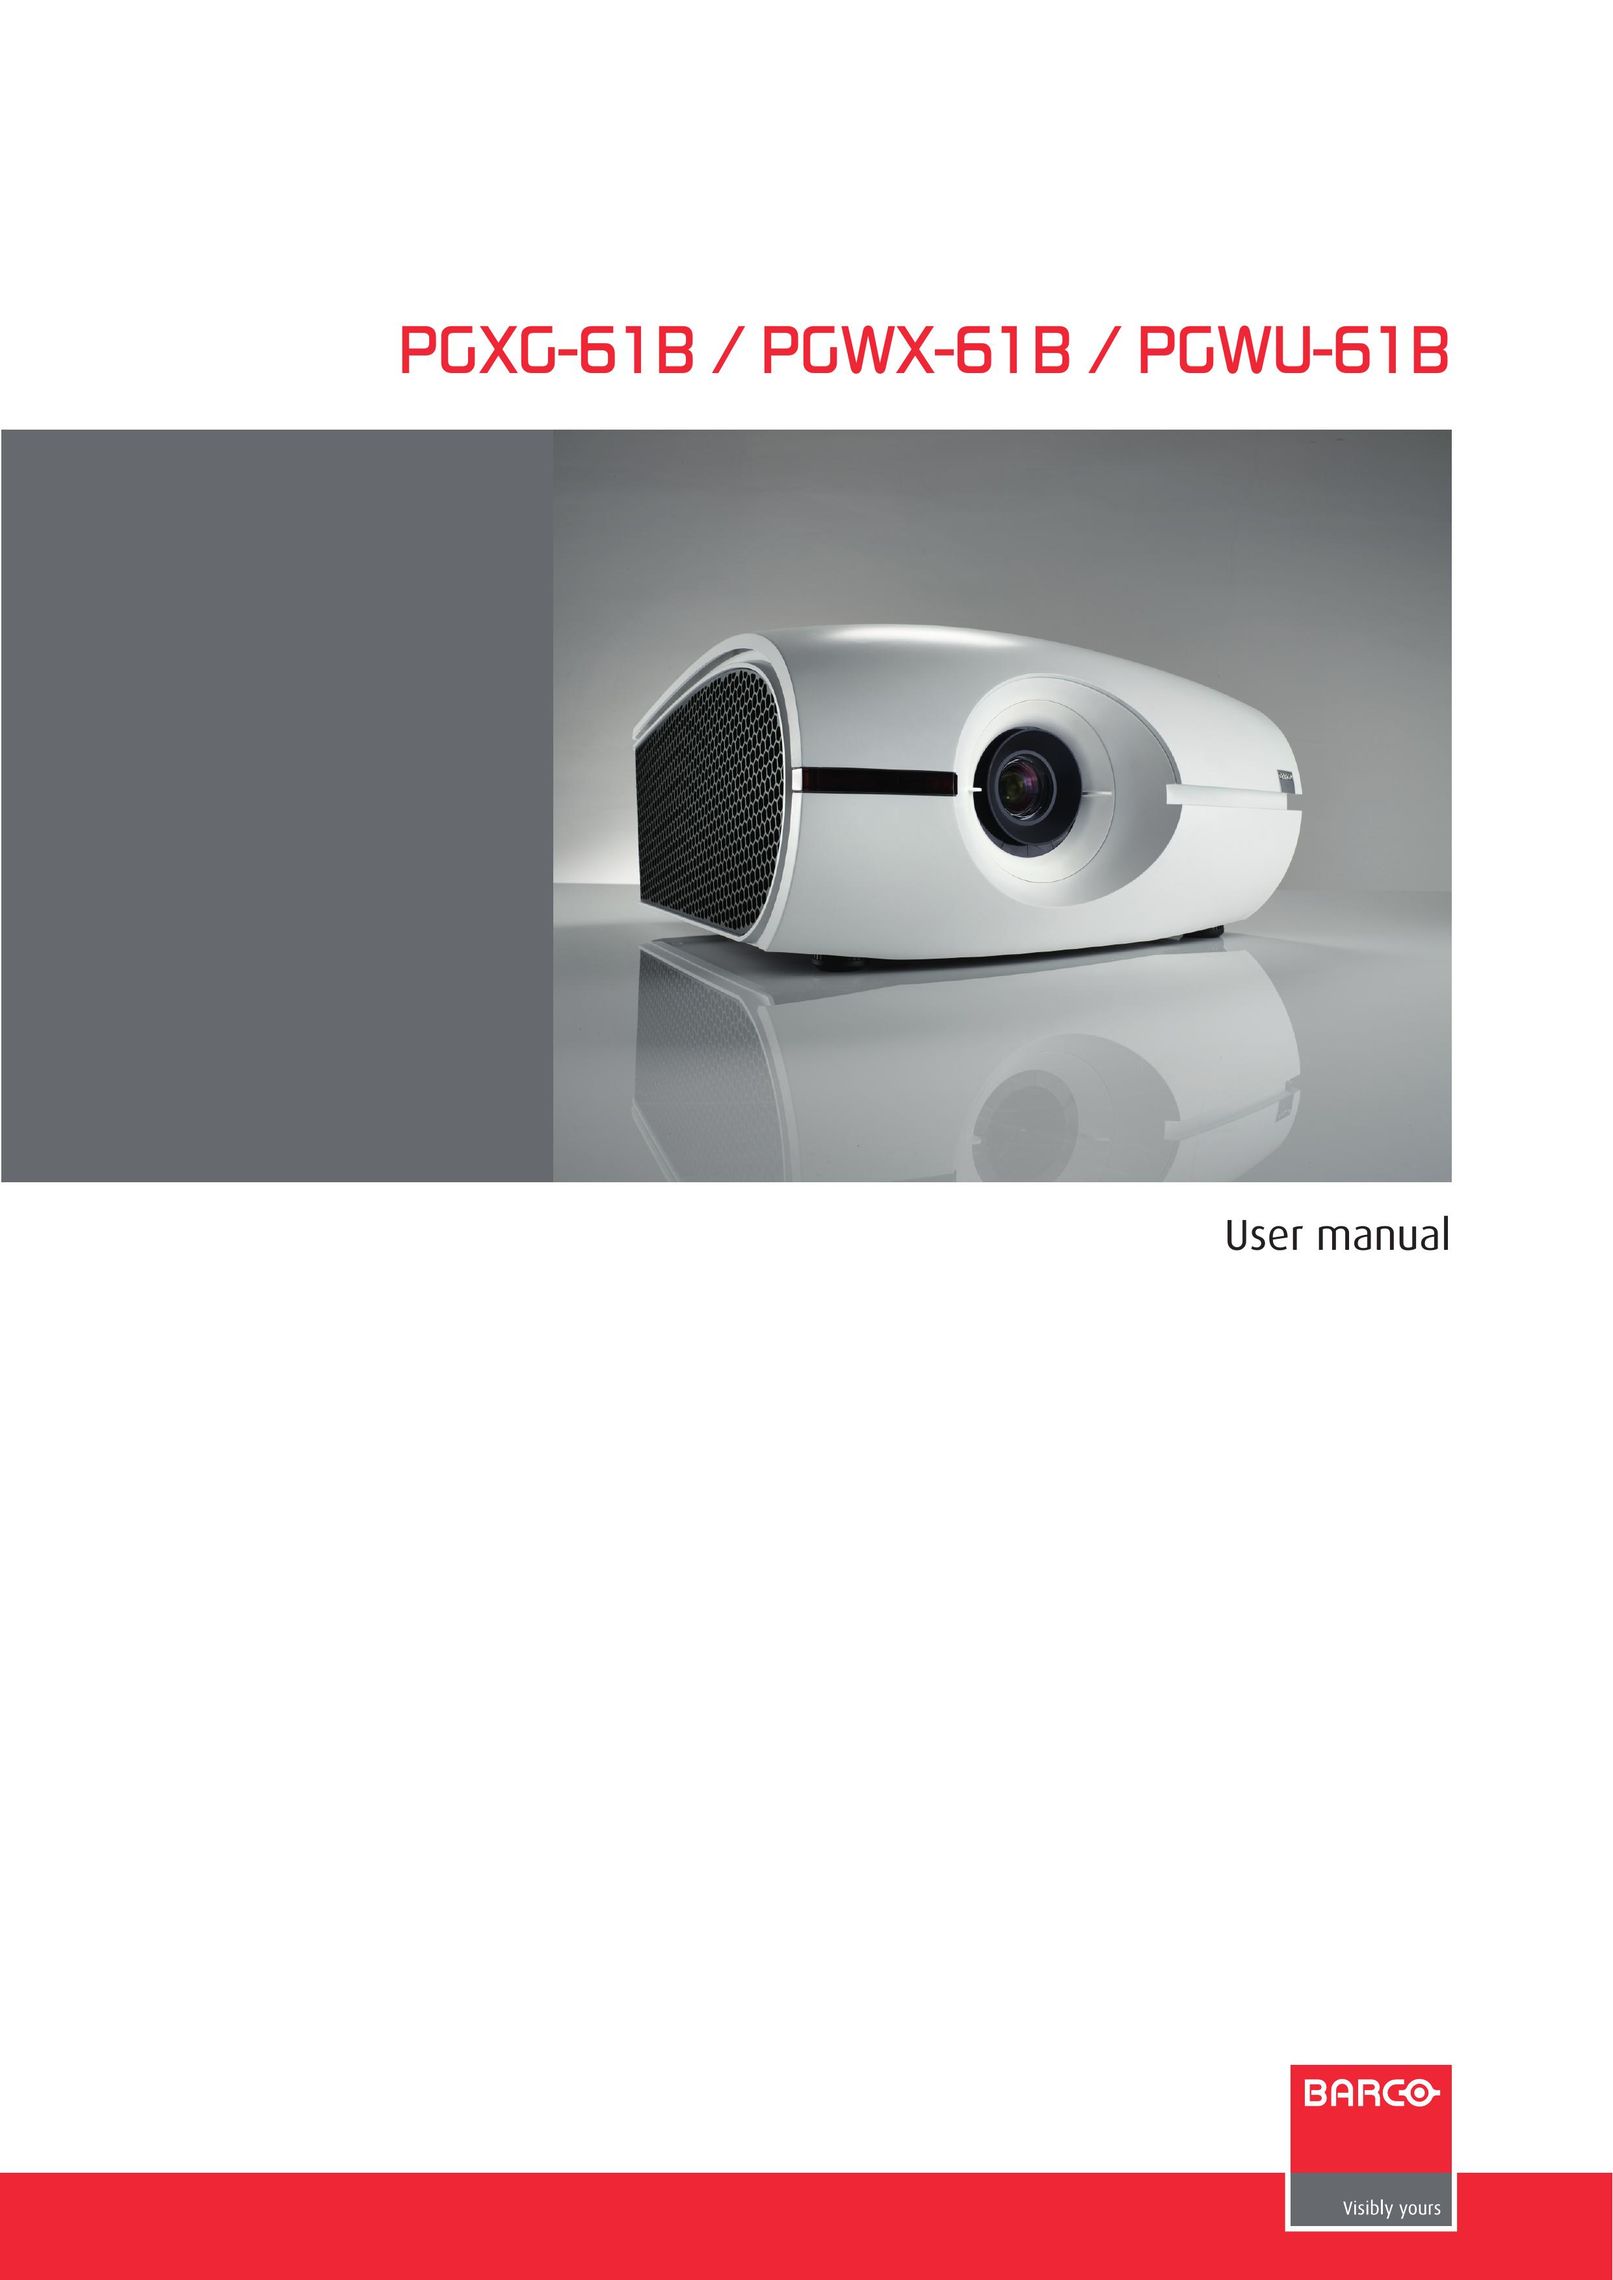 Barco PGXG-61B Projection Television User Manual